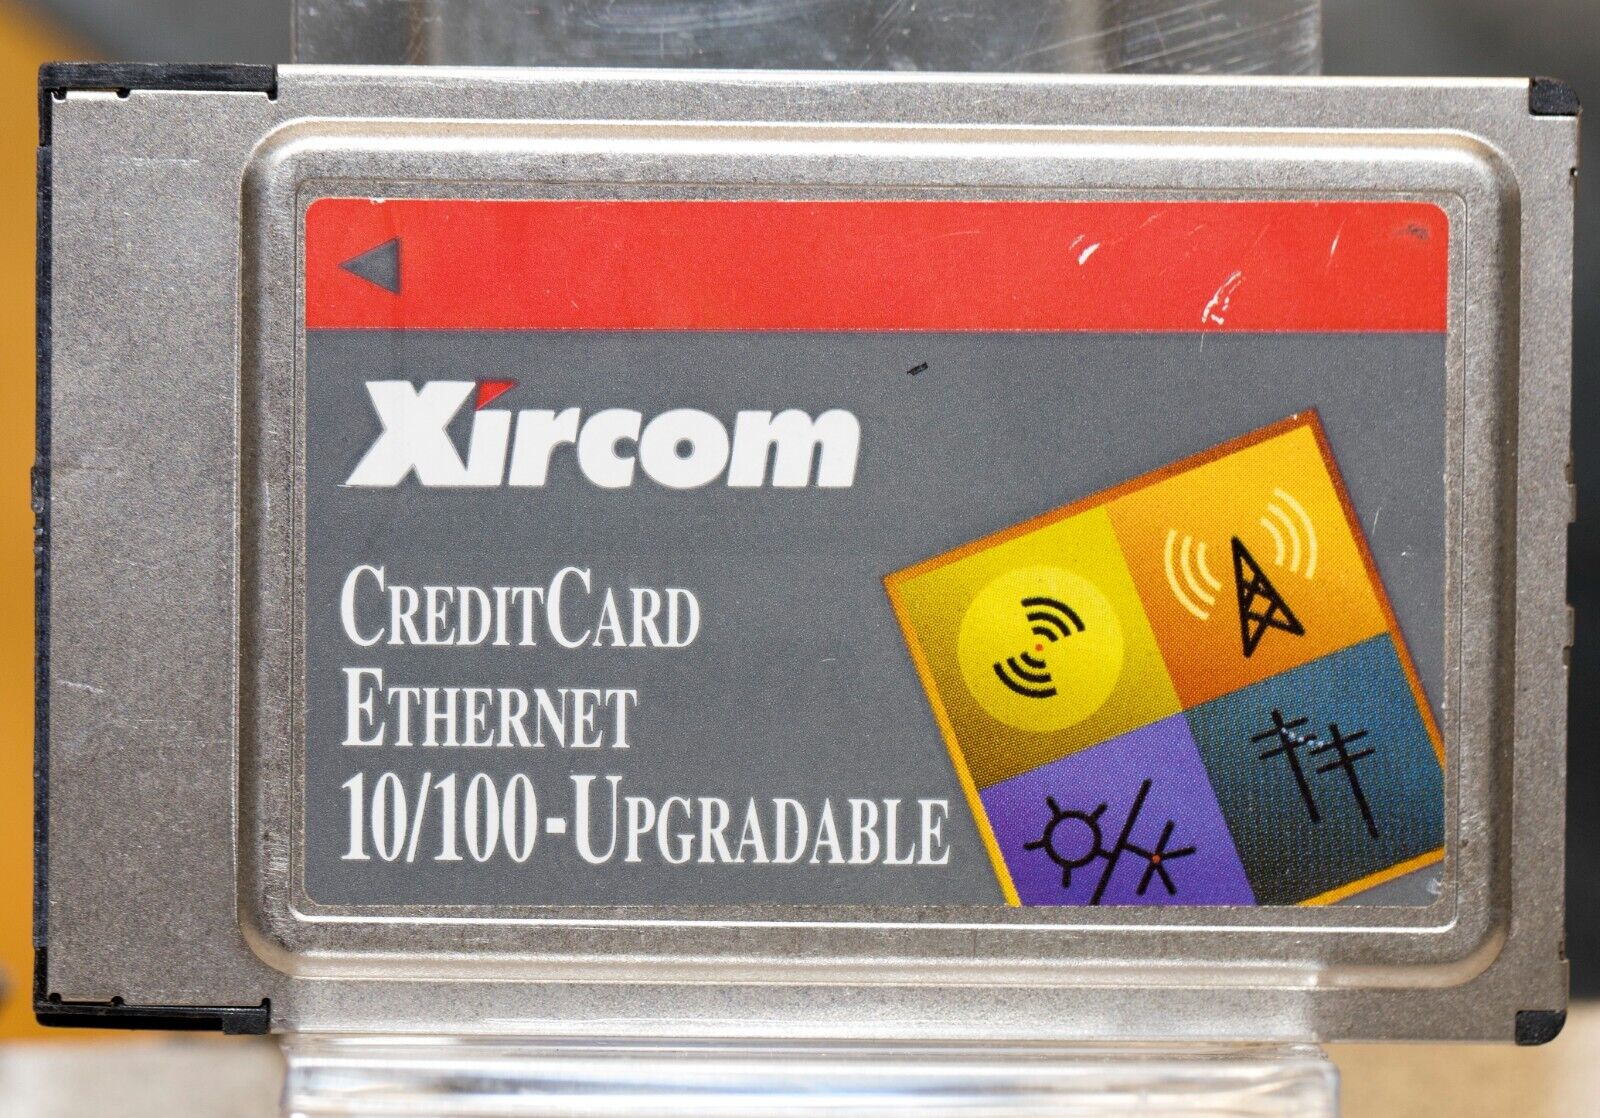 Vintage Xircom CreditCard Ethernet 10/100 Upgradable CE3-10/100 PCMCIA PC Card